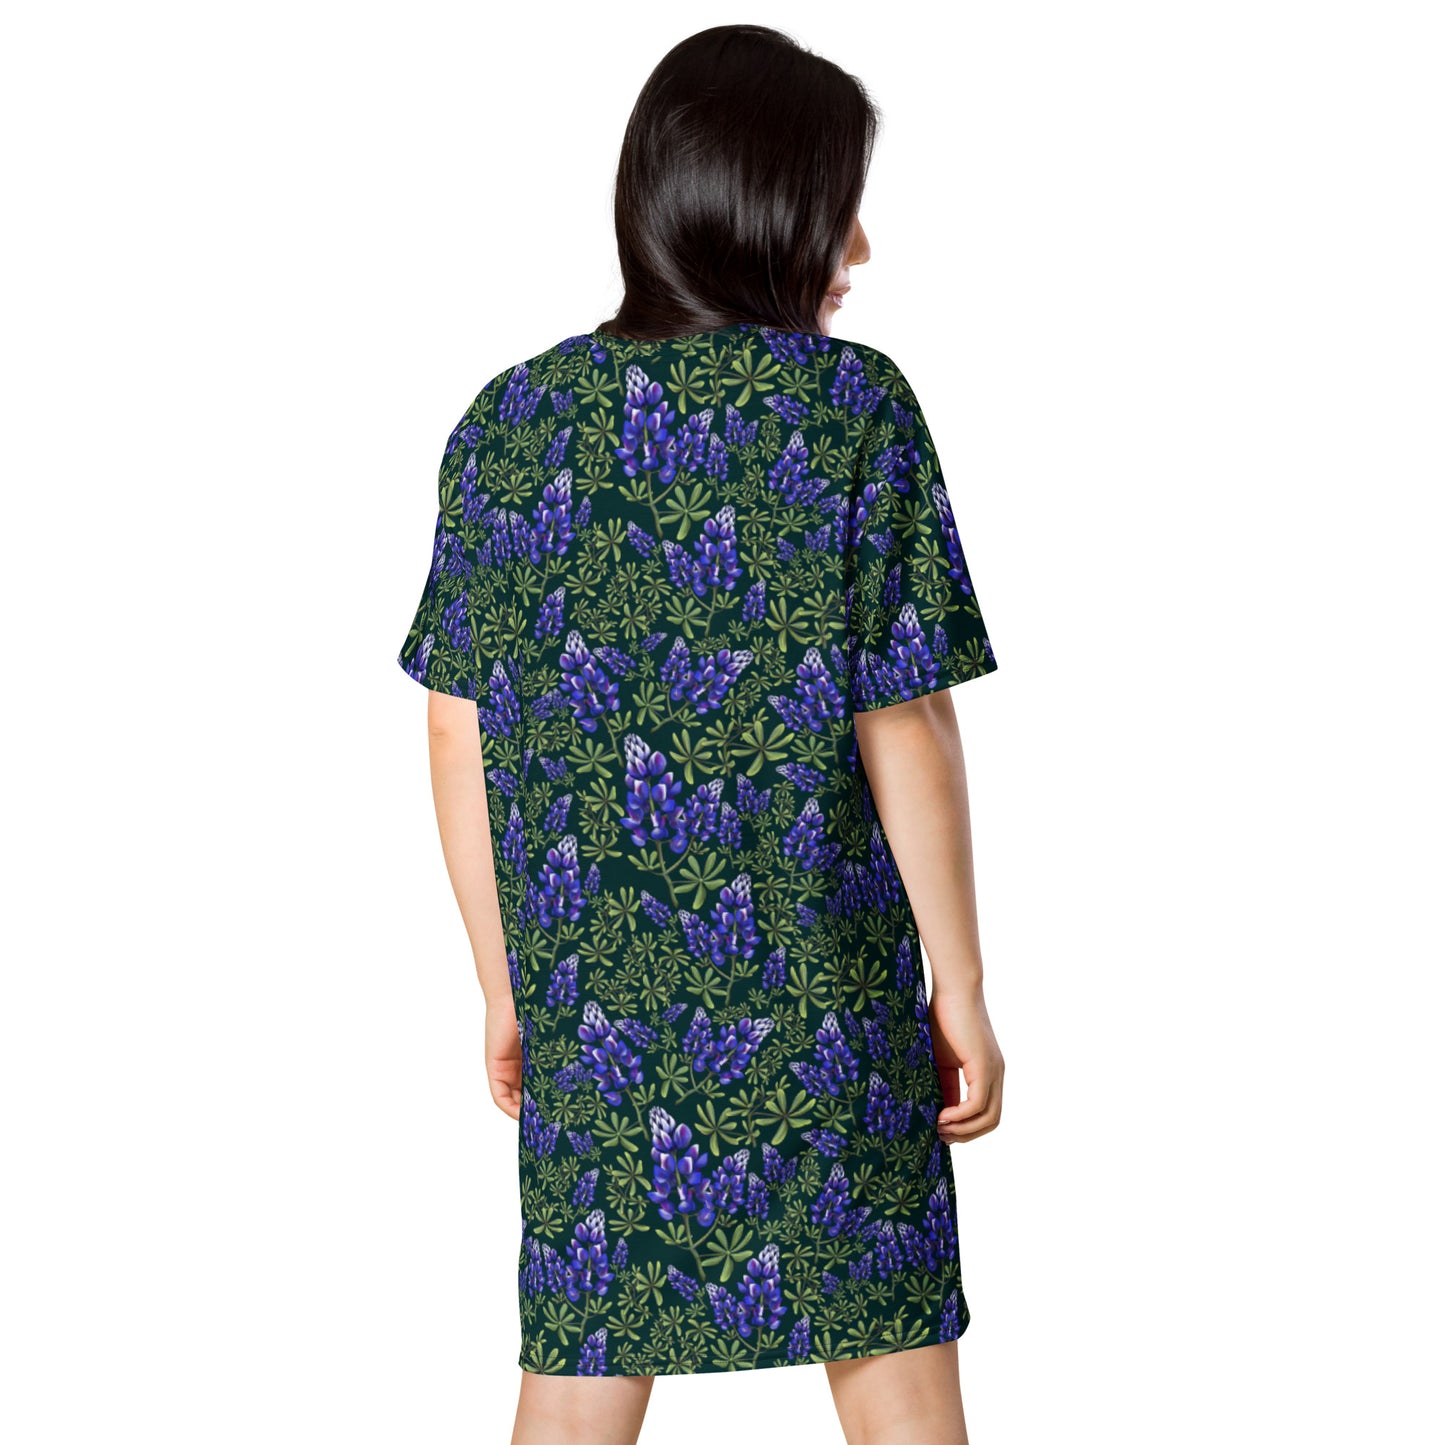 Arroyo Lupine T-shirt dress